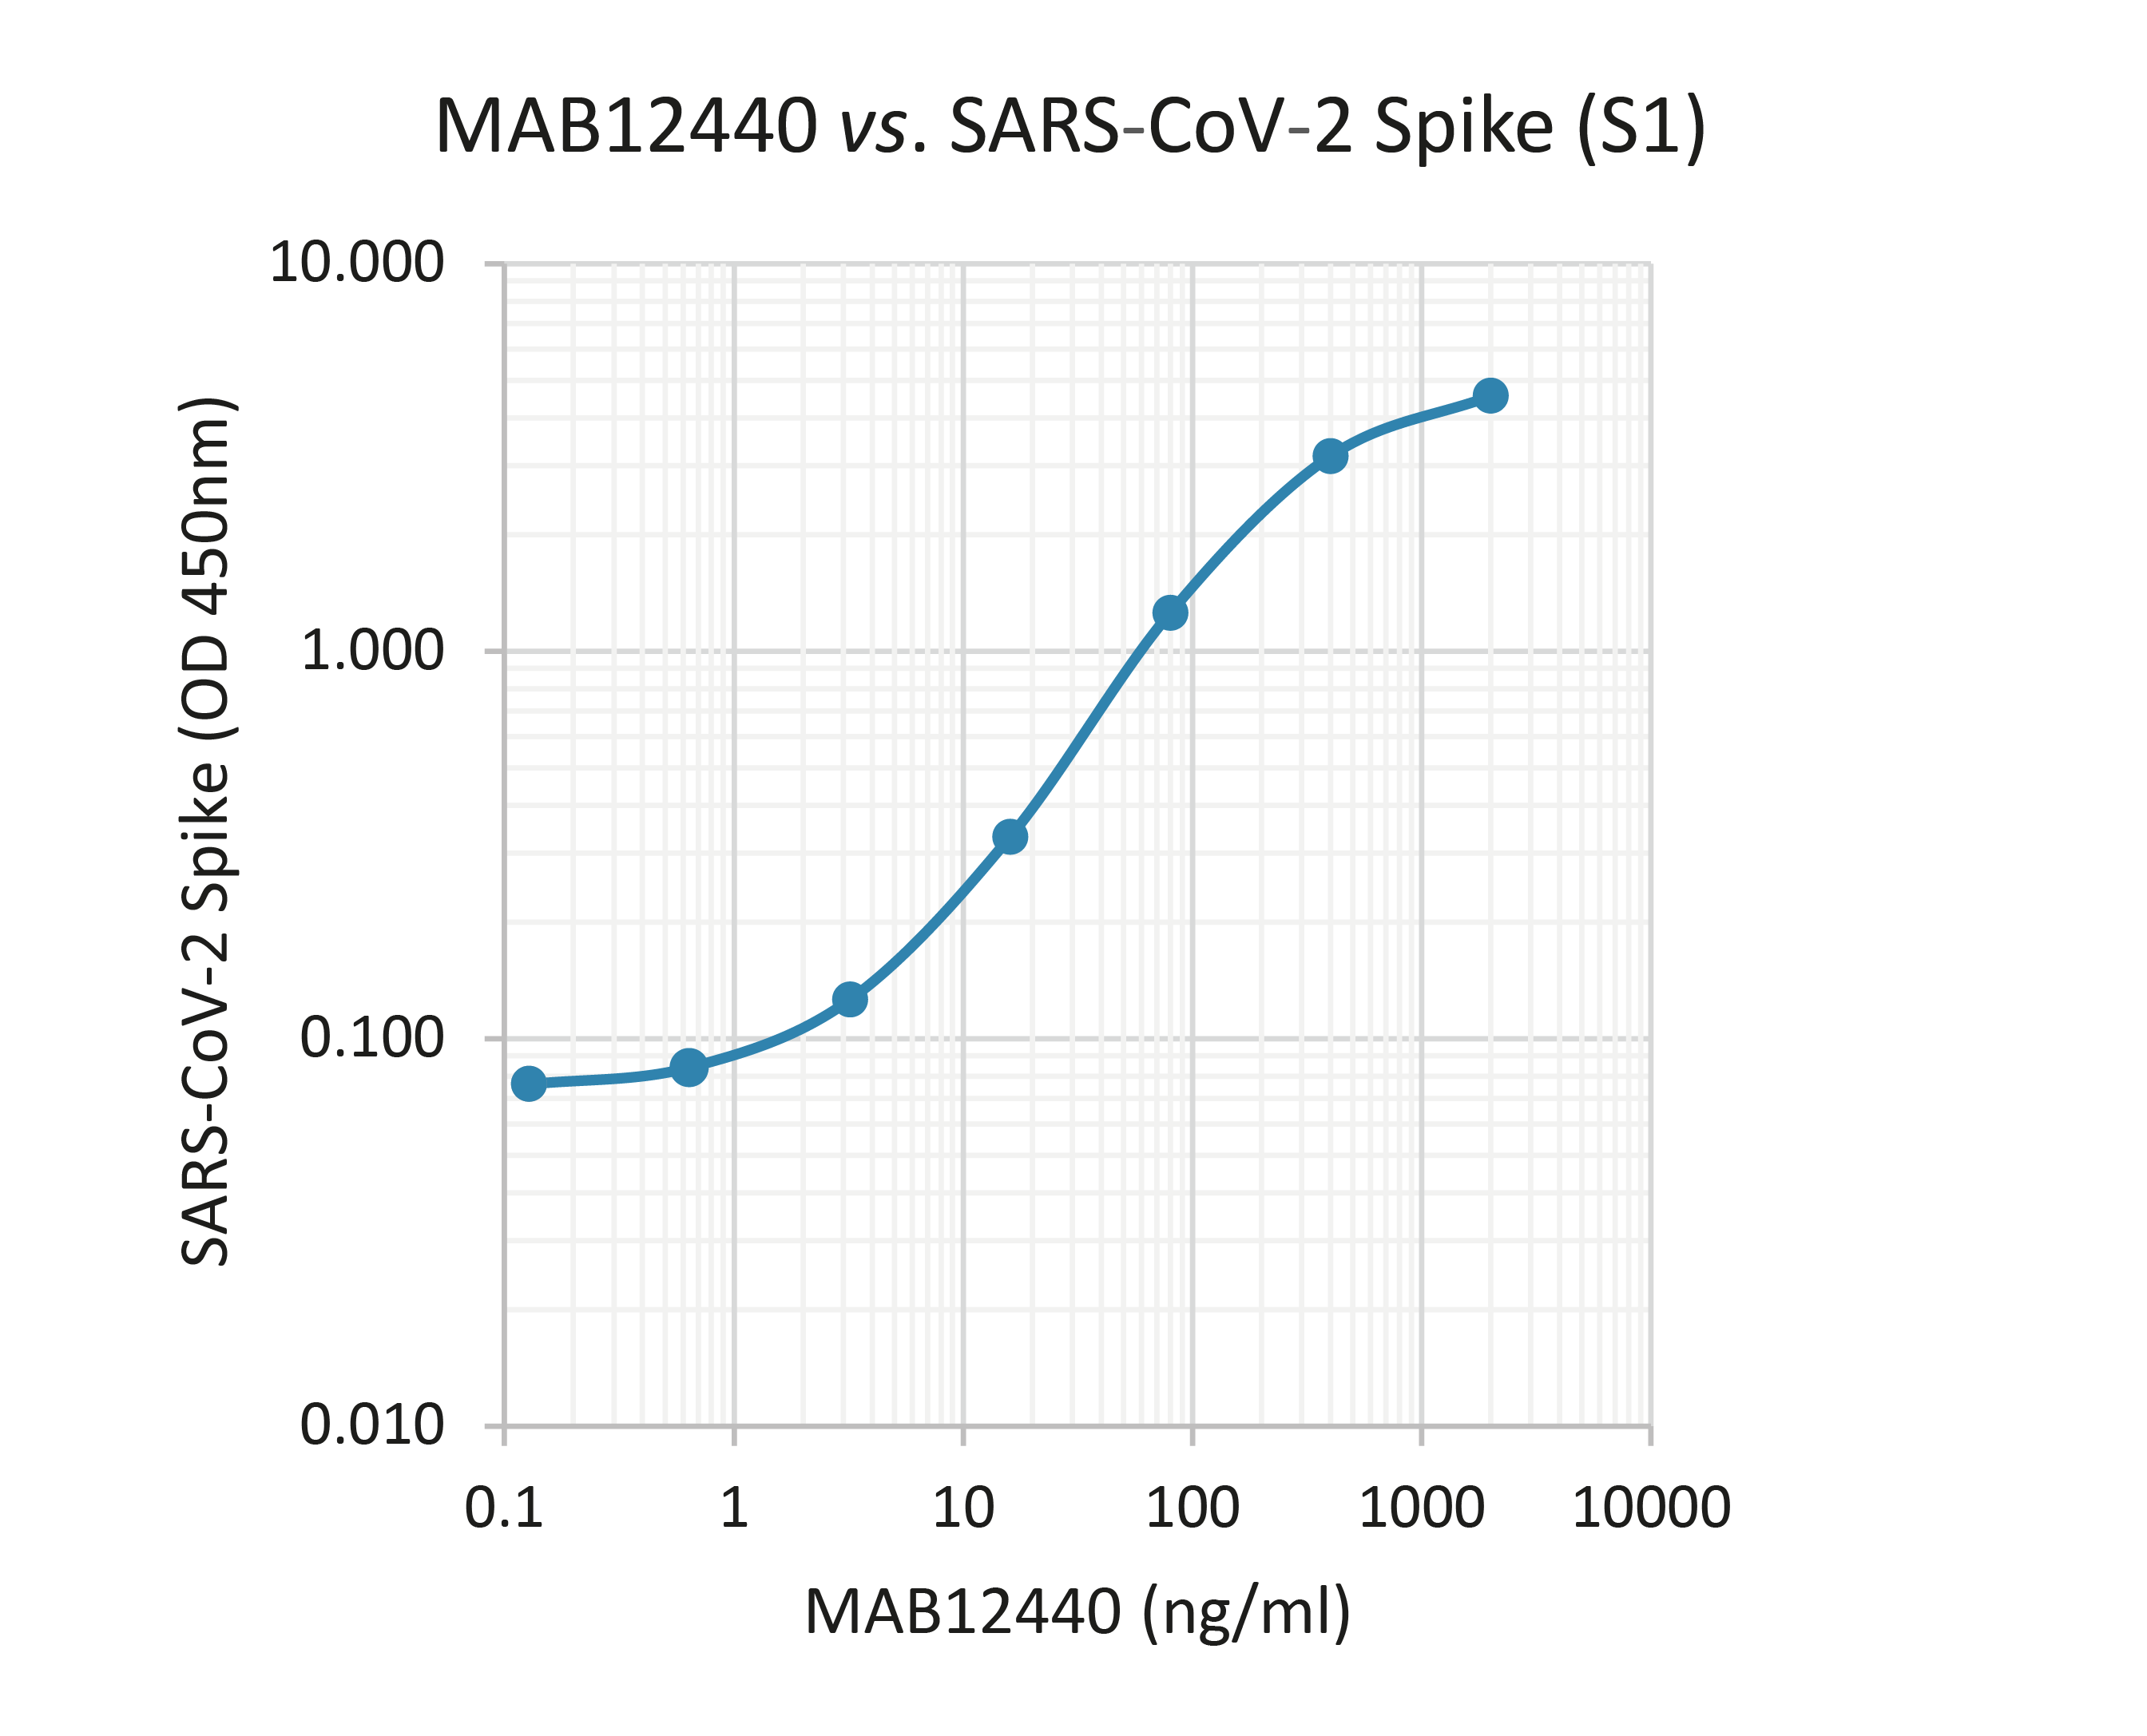 MAB12440 vs. SARS-CoV-2 Spike (S1) (Single Curve)